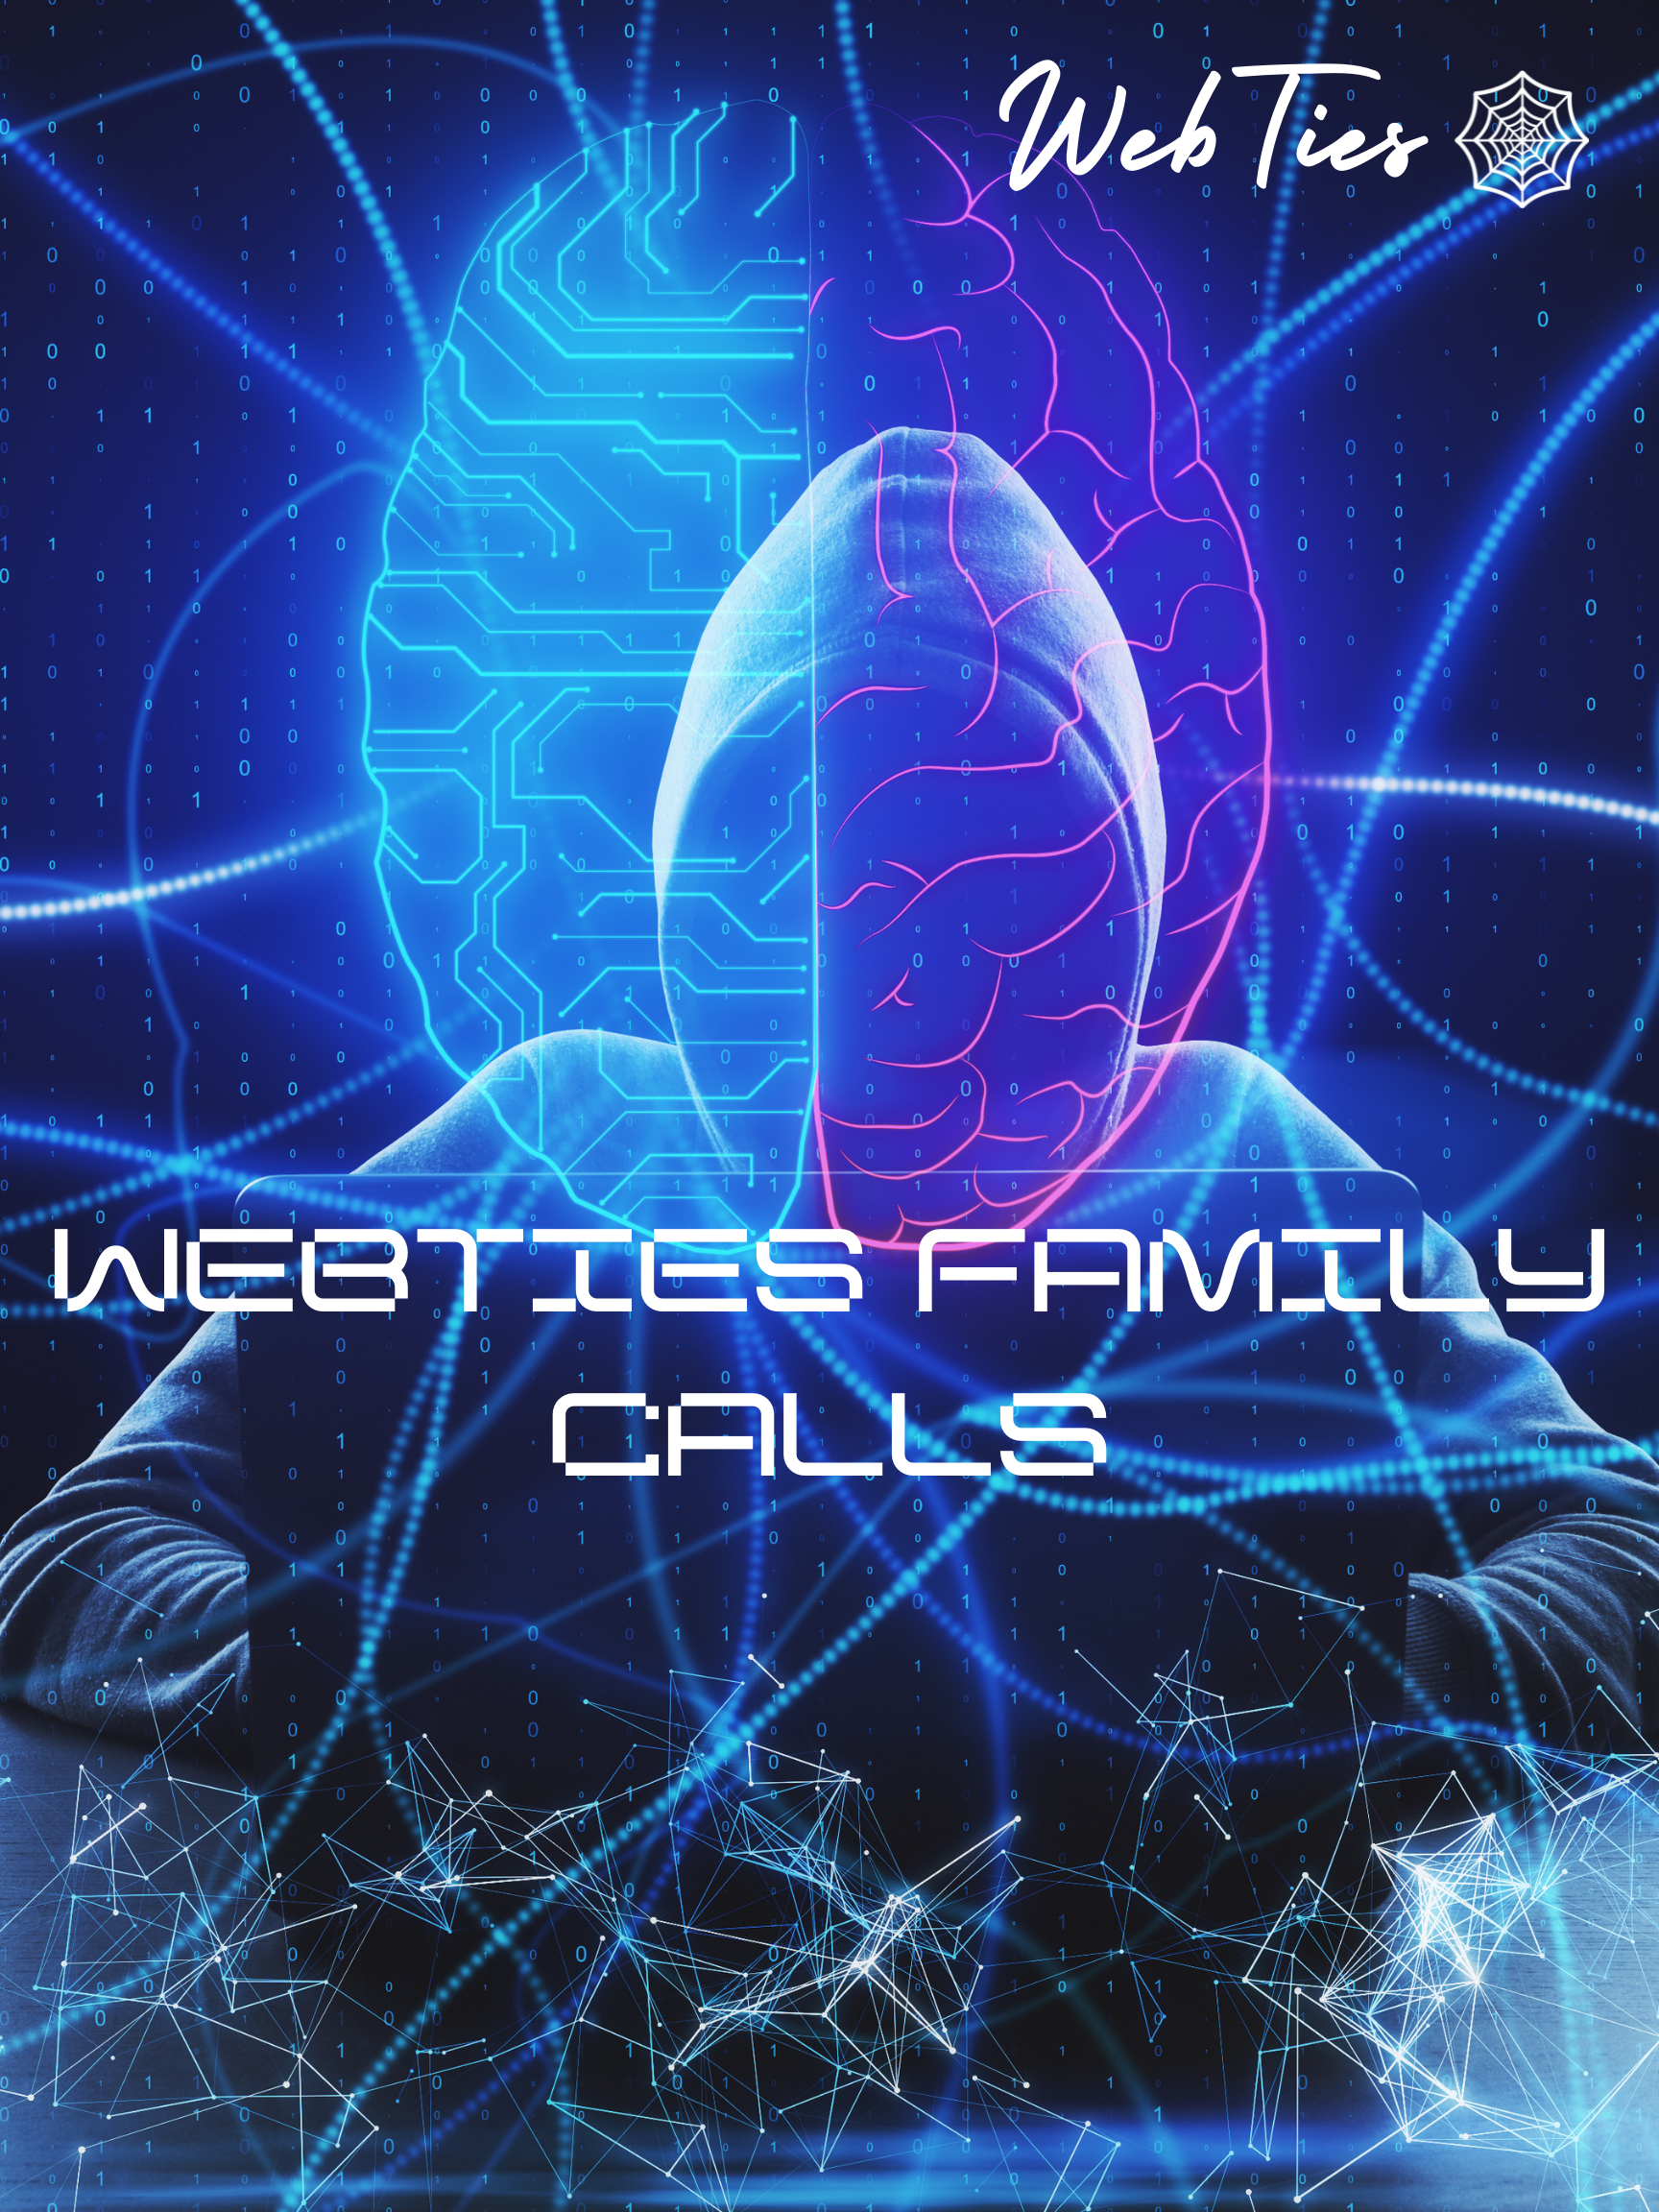 WebTies-Family-Calls